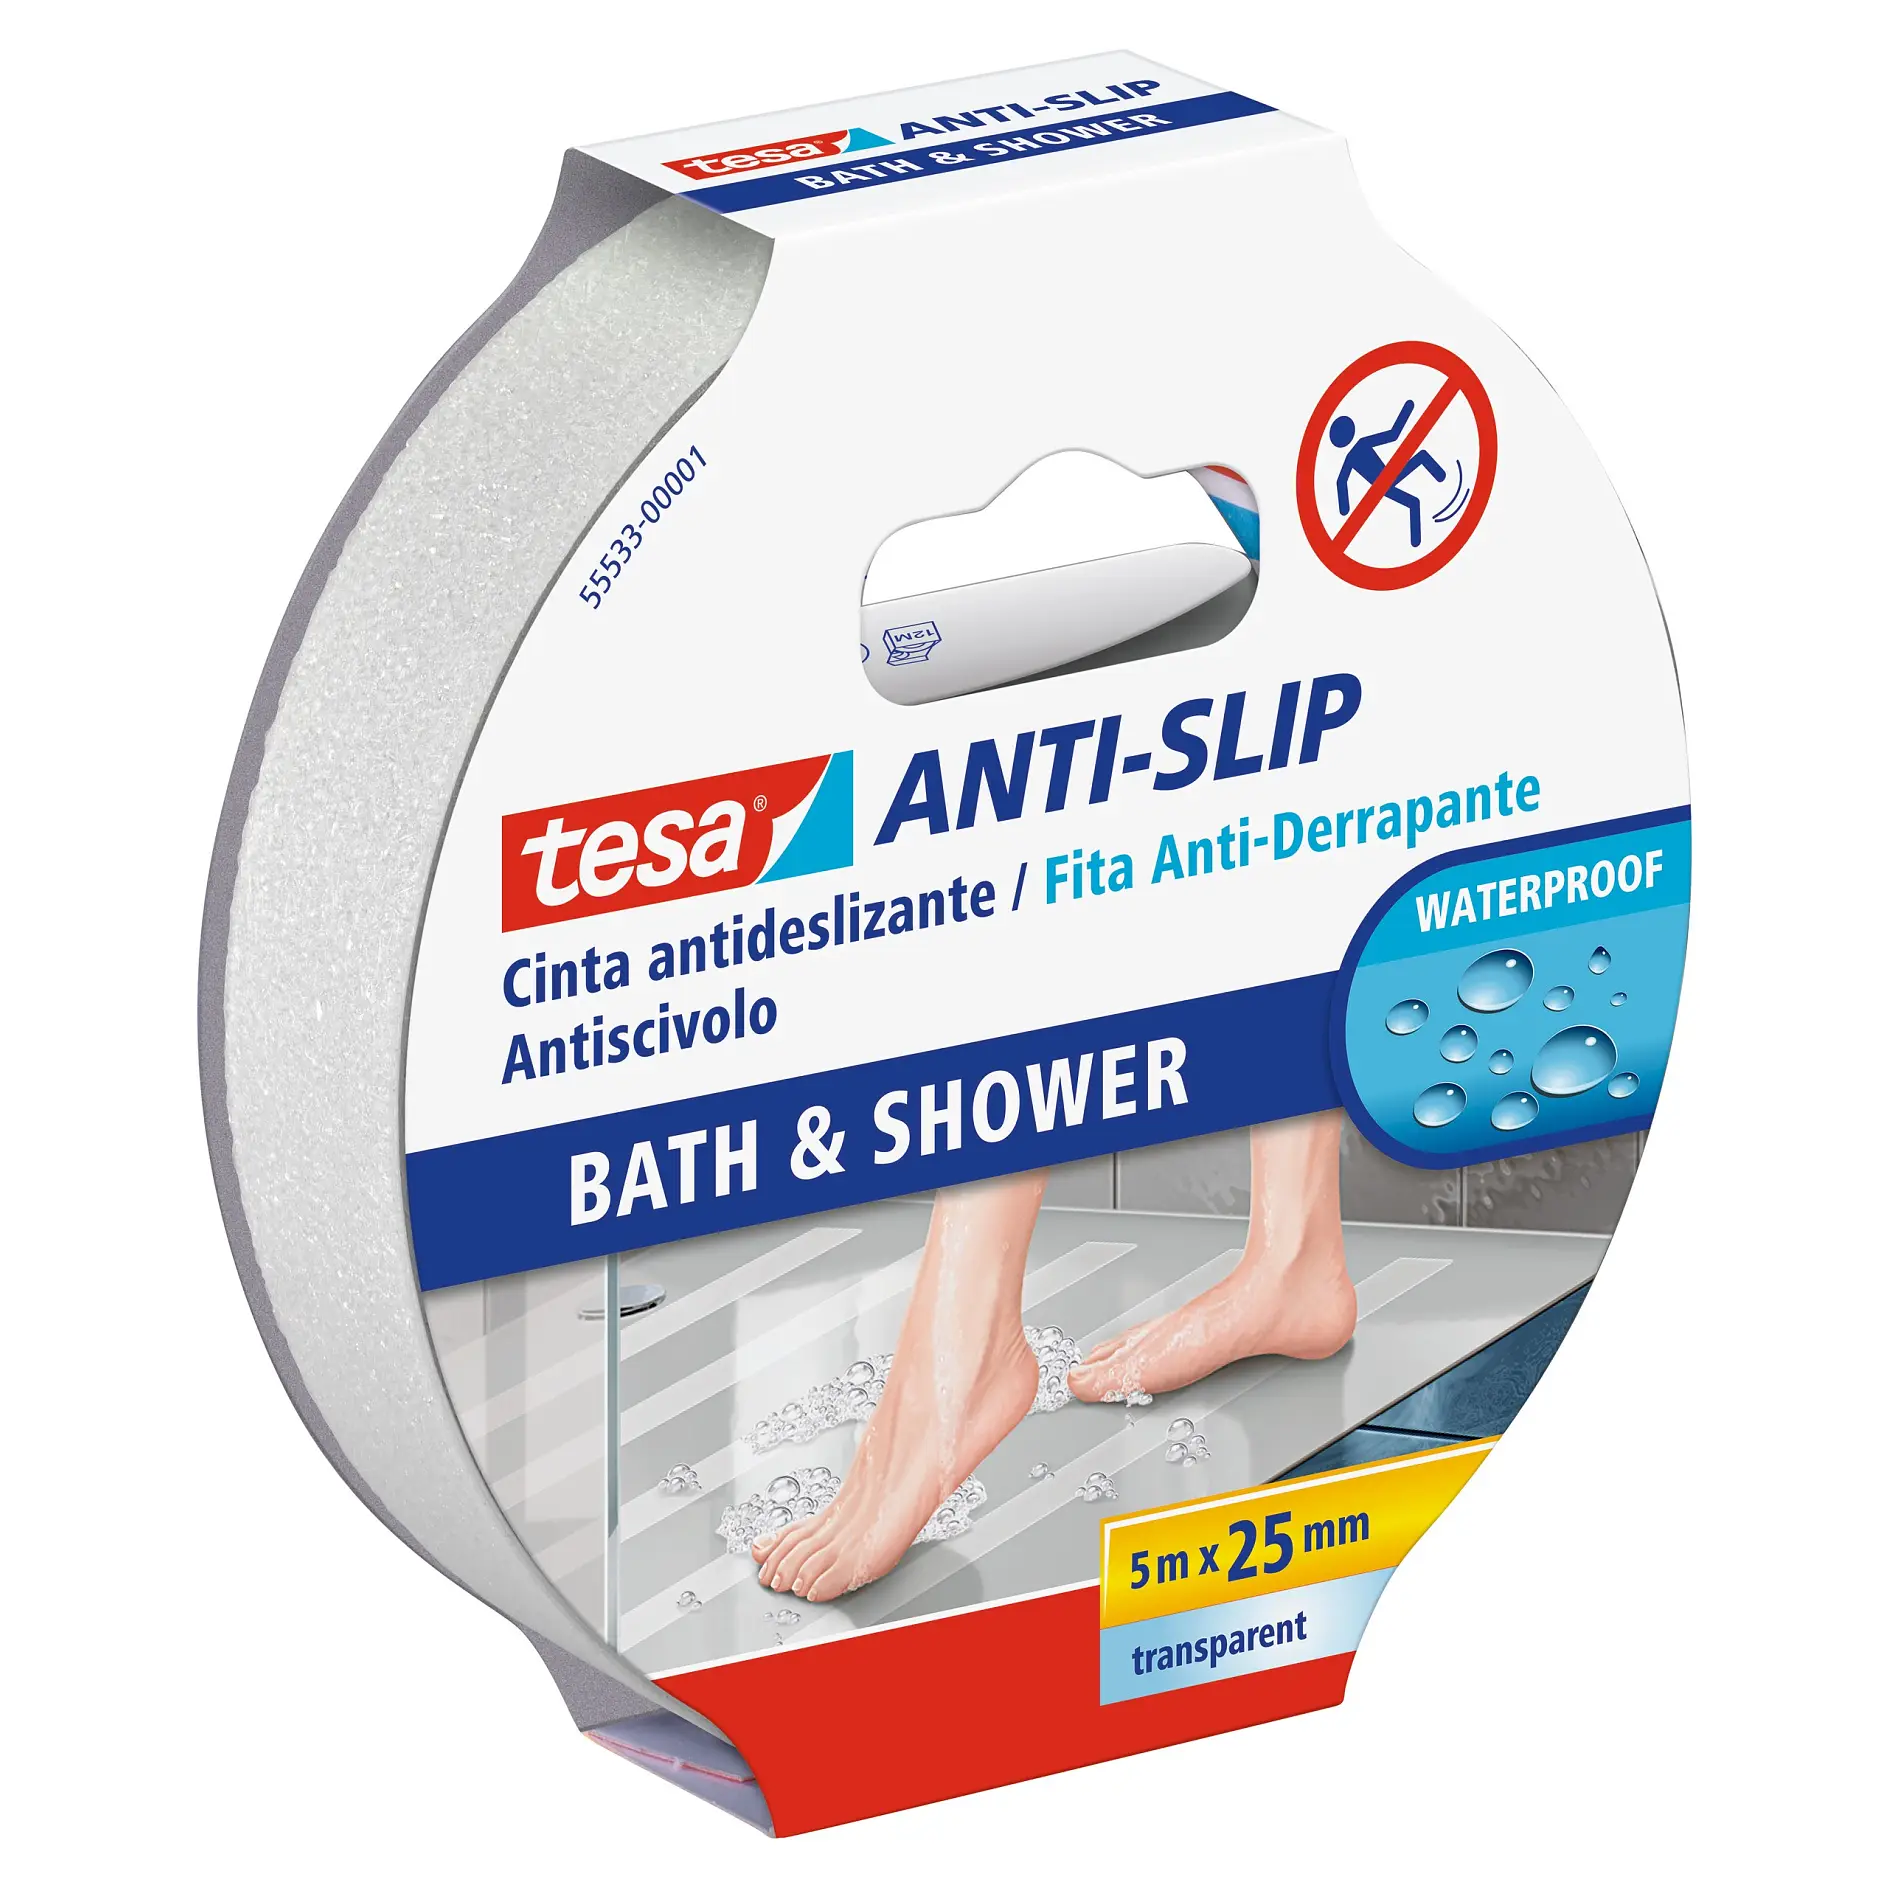 [en-en] tesa Anti-slip tape for bathroom and shower, 5m x 25mm, transparent